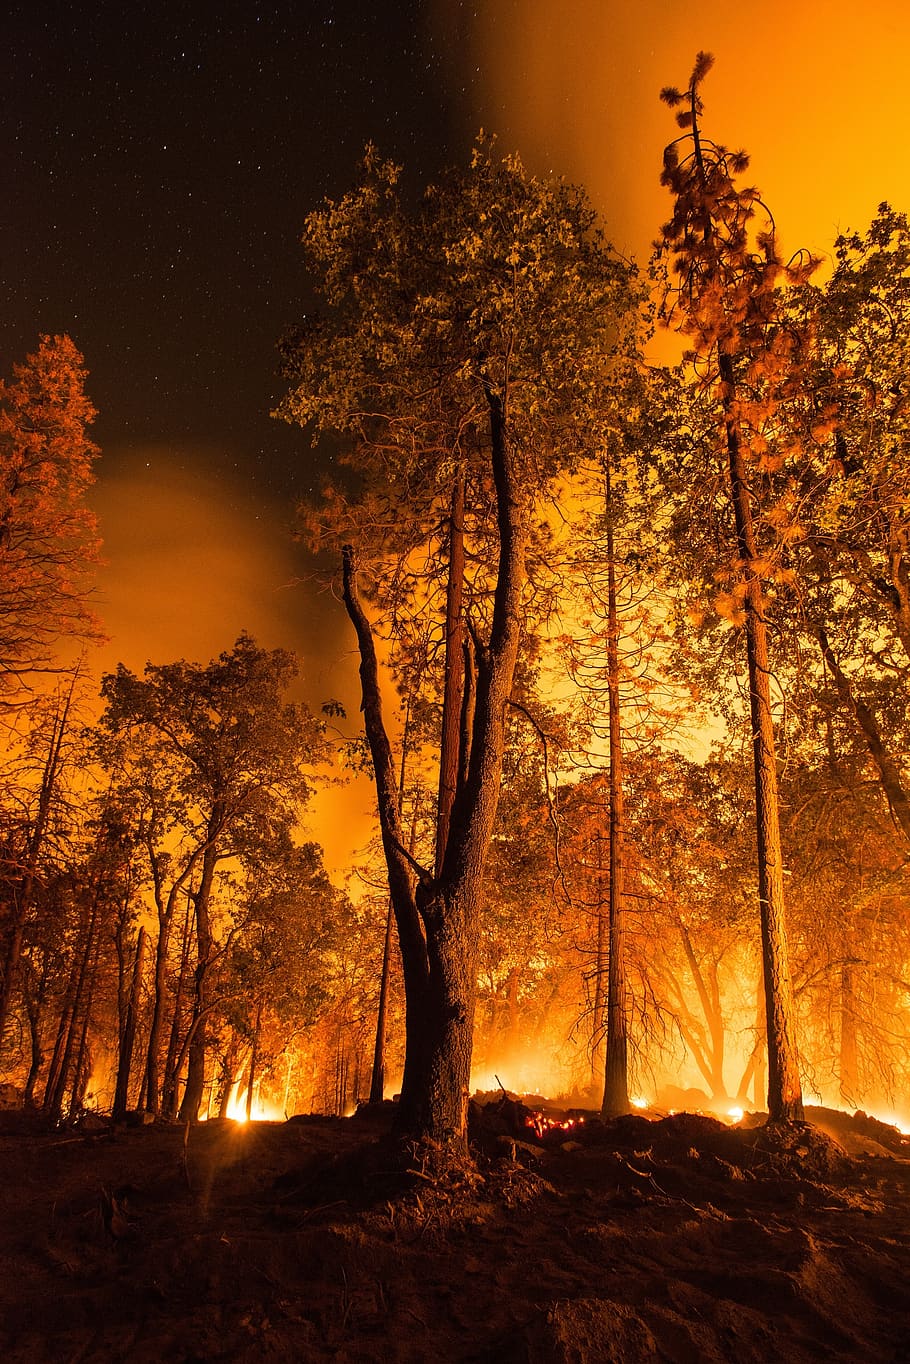 incendio forestal, incendio, siluetas, bomberos, humo, árboles, calor, ardor, caliente, peligro